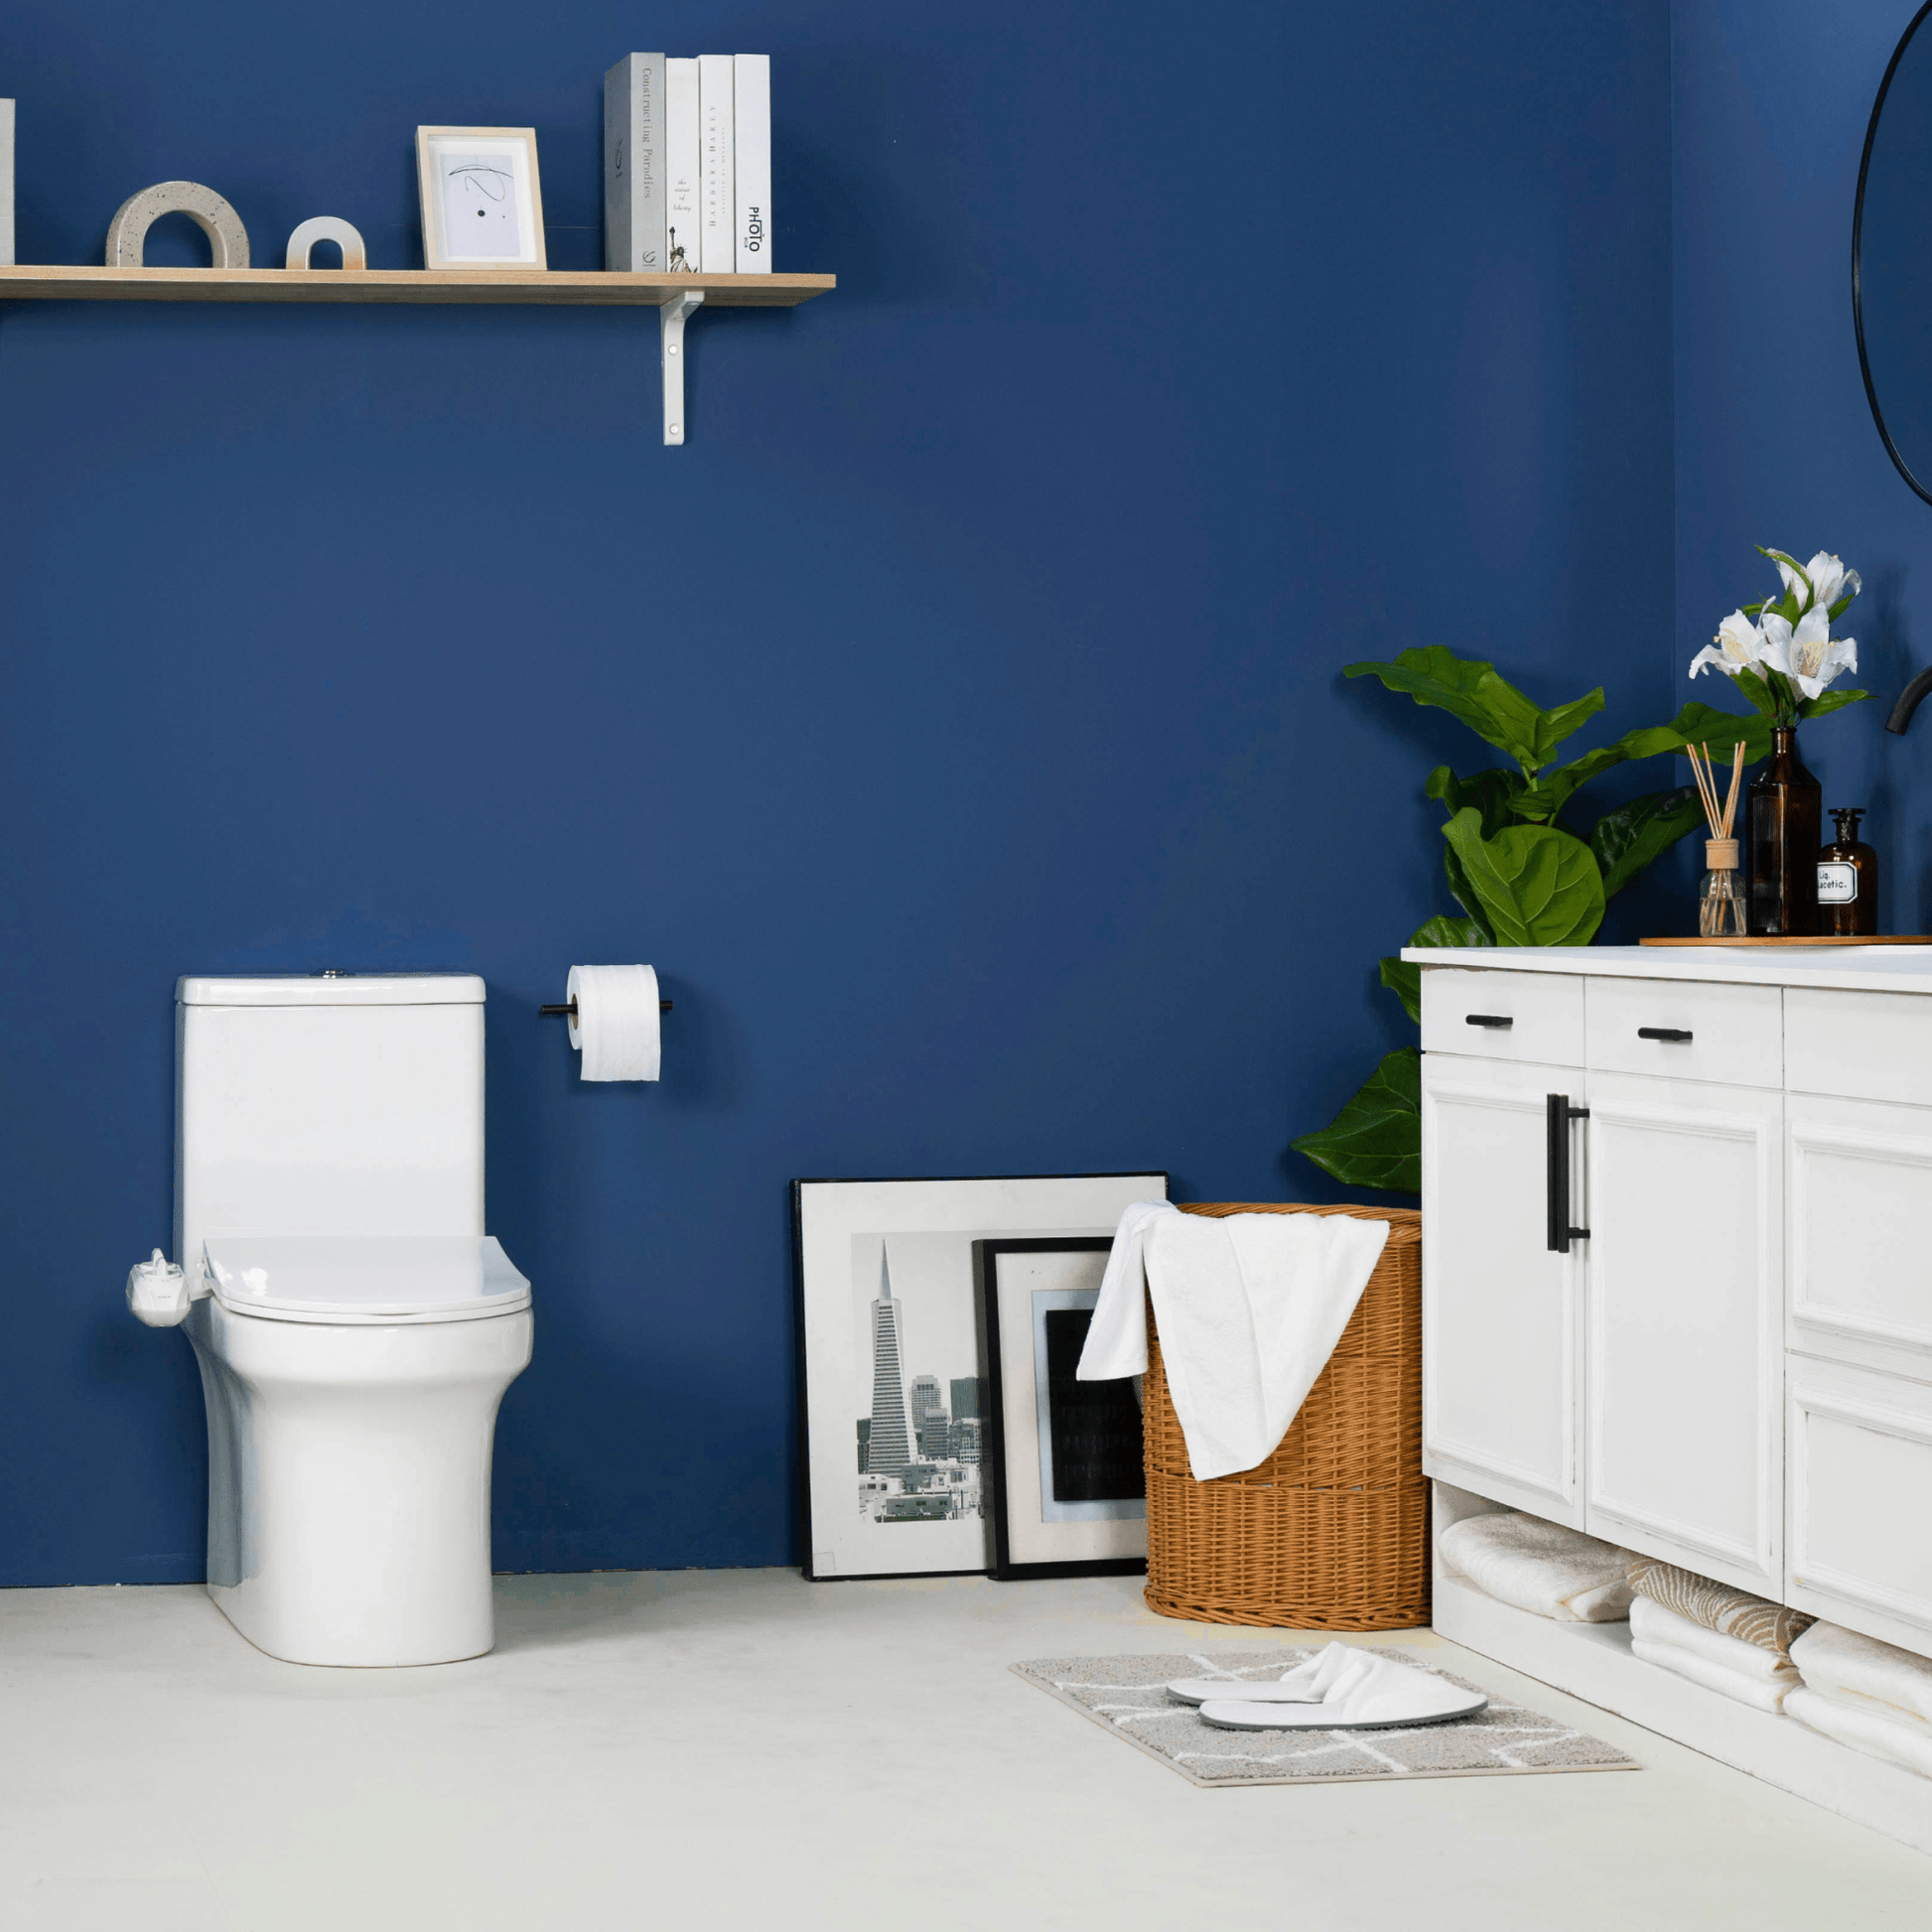 NEO 120 Plus White elevates your bathroom to a modern style